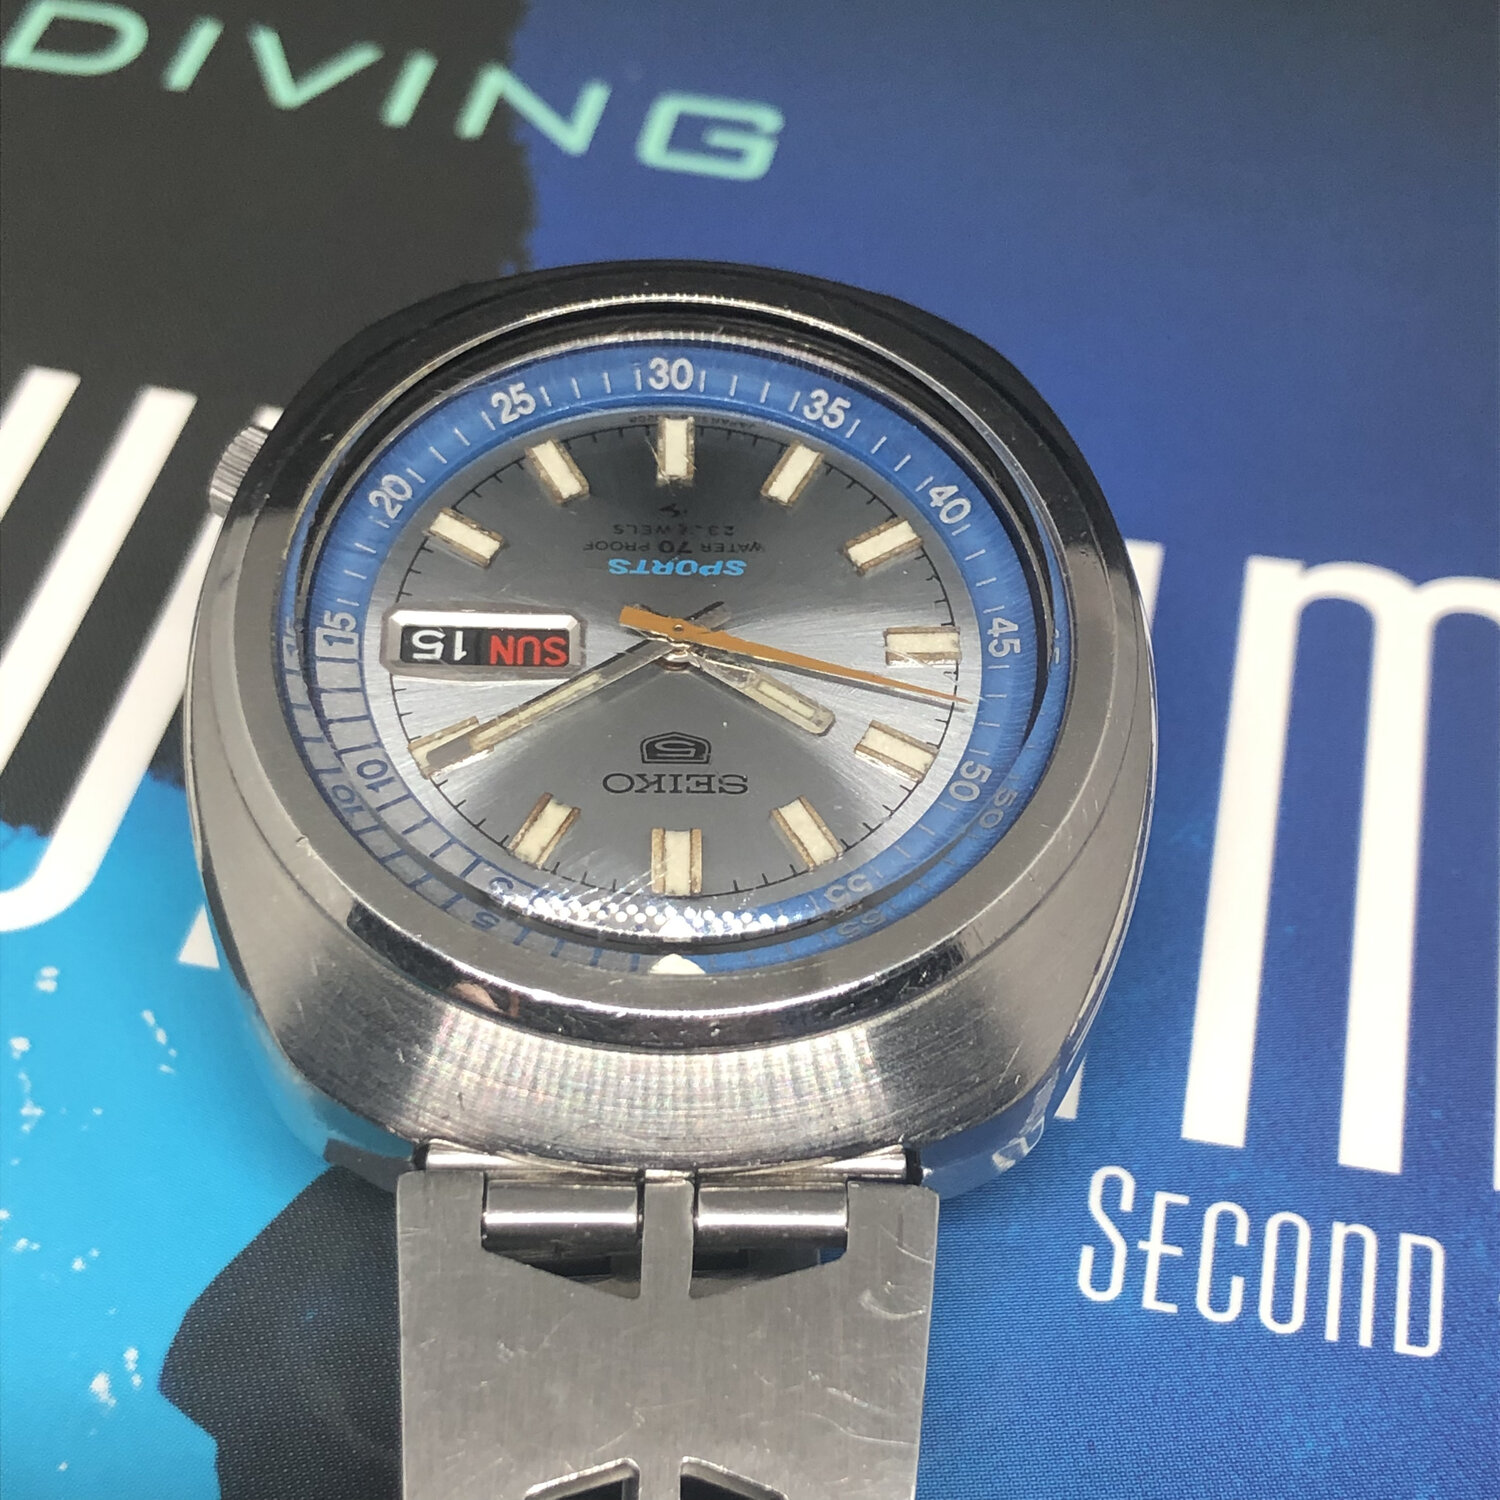 Vintage Seiko 5126 Sports Watch for Sale — chronopal